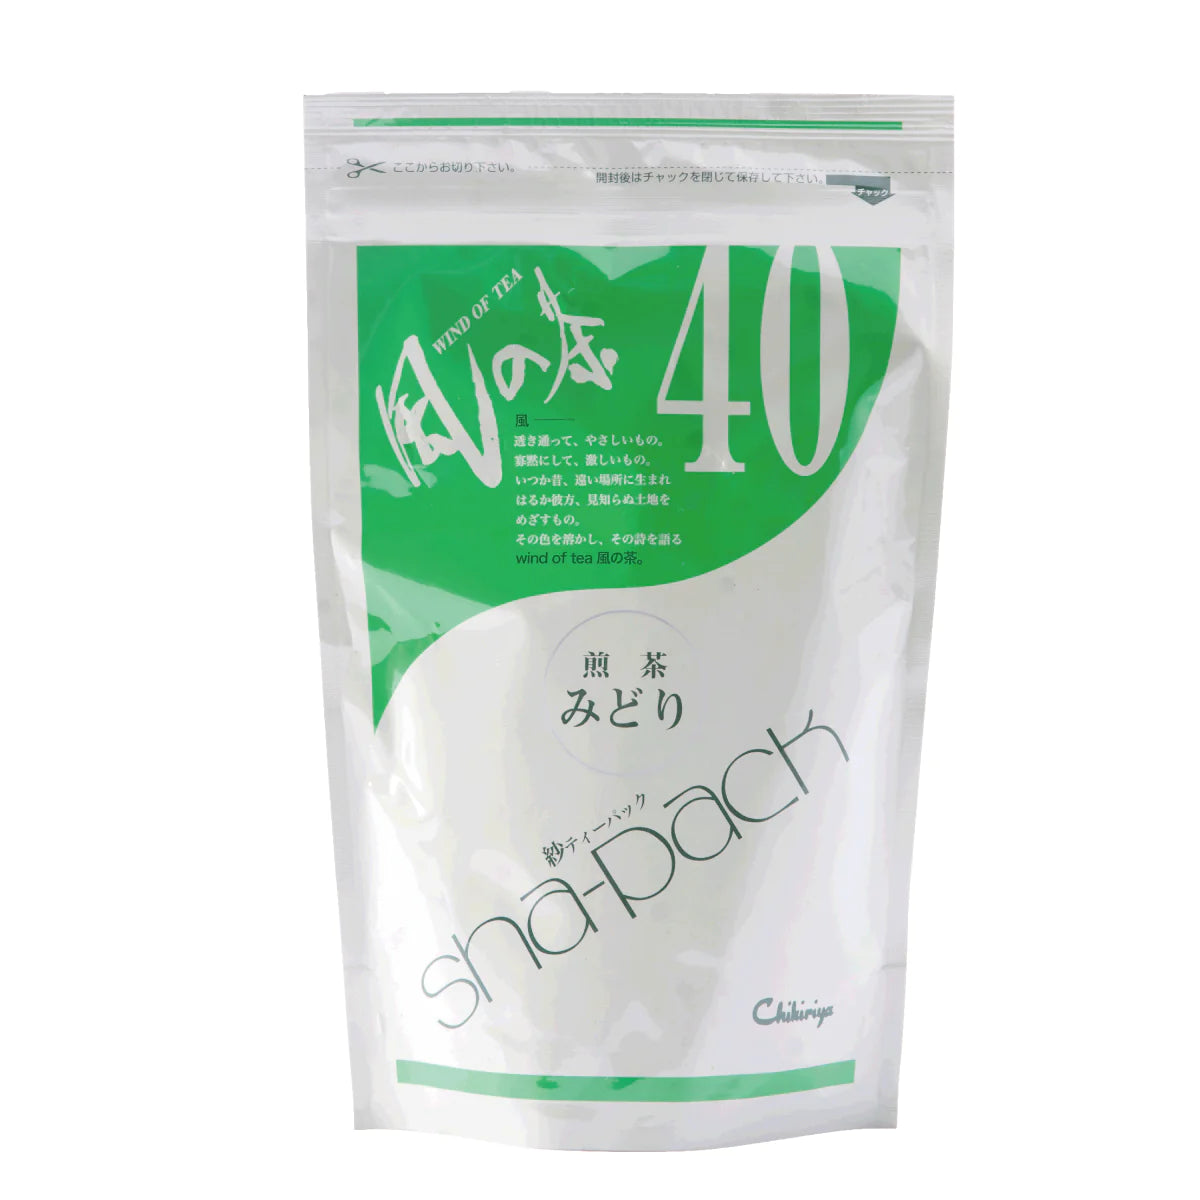 Sencha Midori – 40 Tea bags - Kaze no Cha series